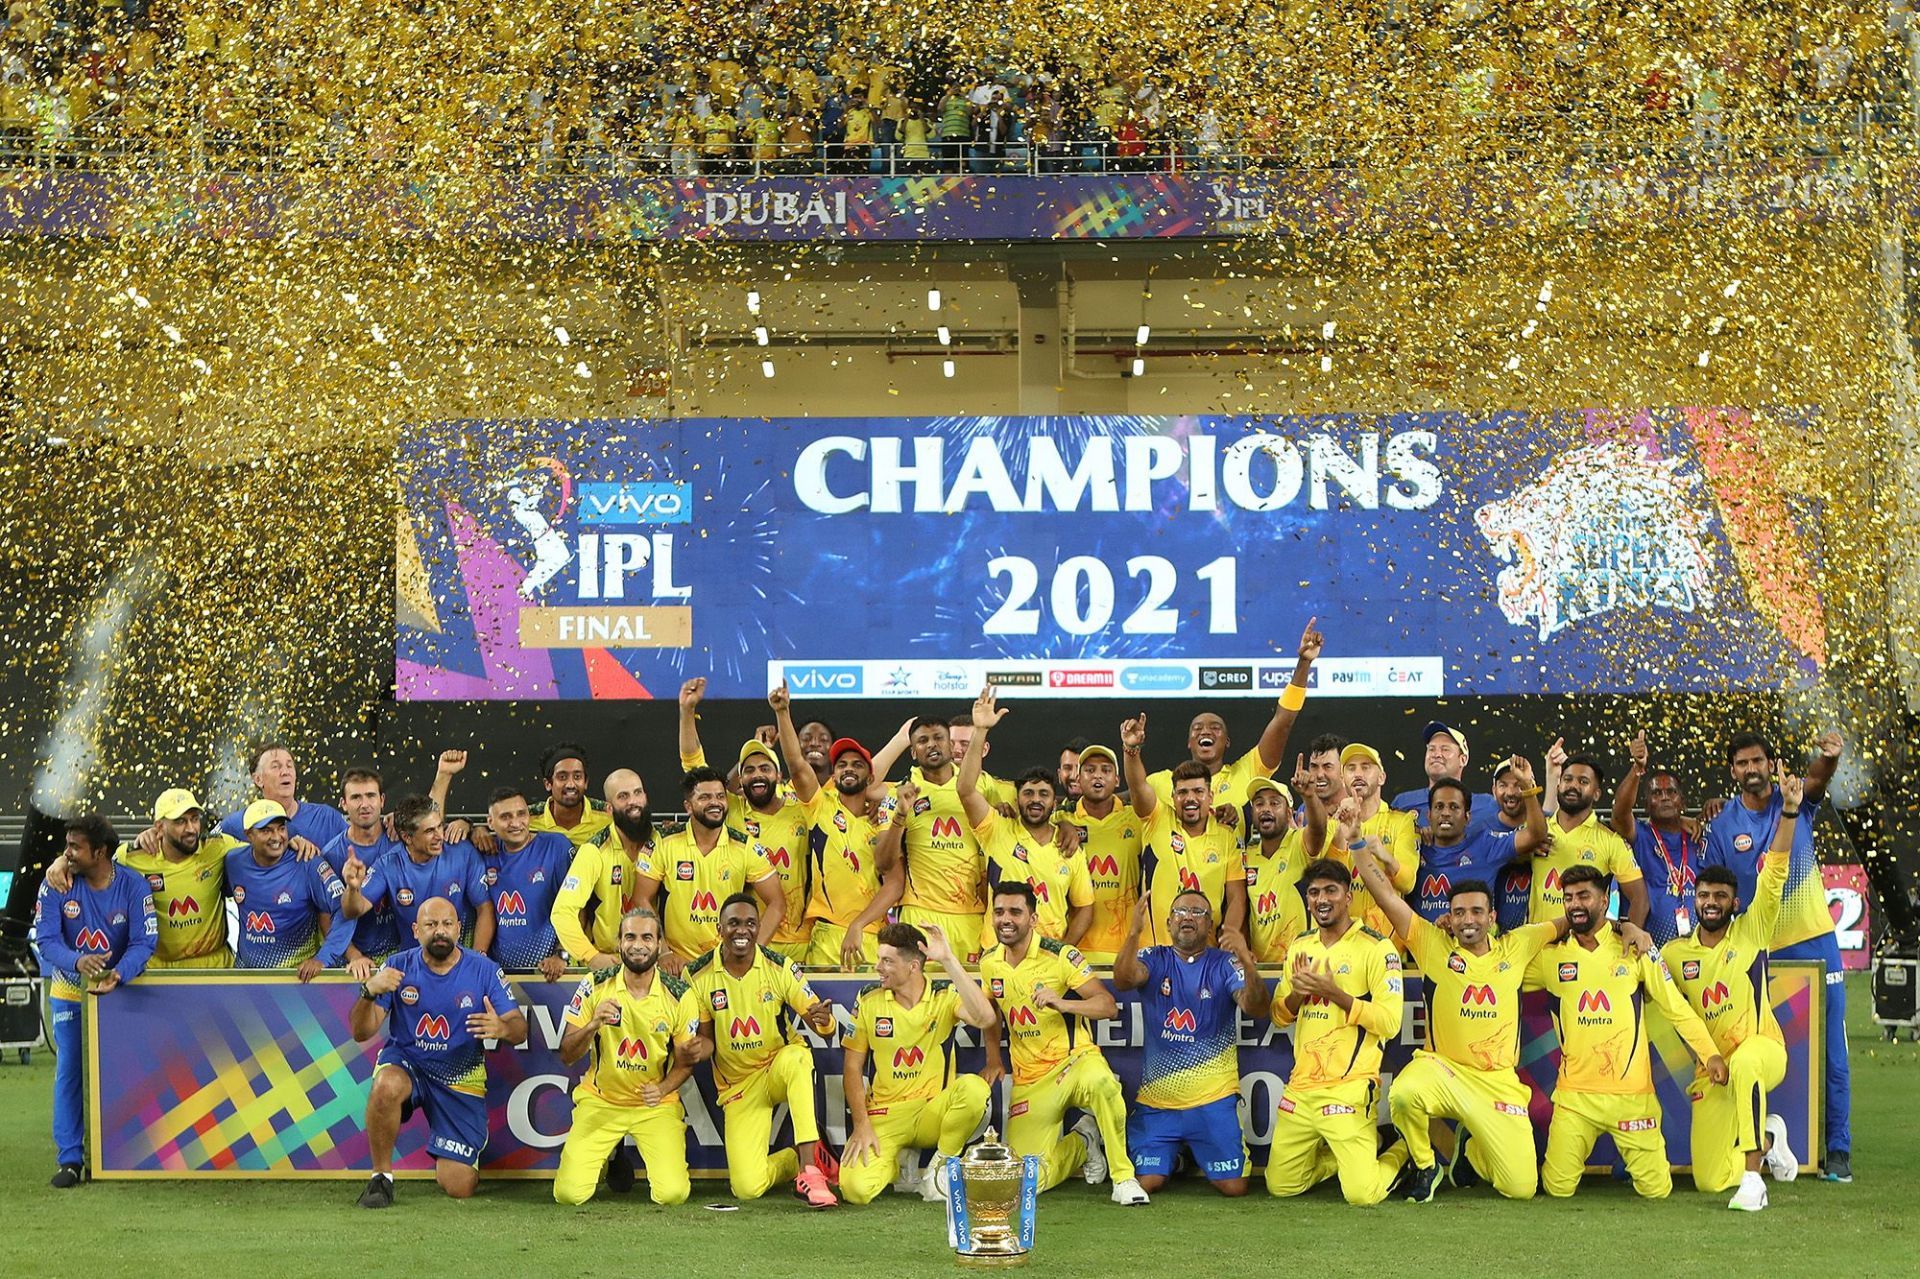 CSK won the IPL 2021 (Image Source: BCCI/IPLT20.COM)